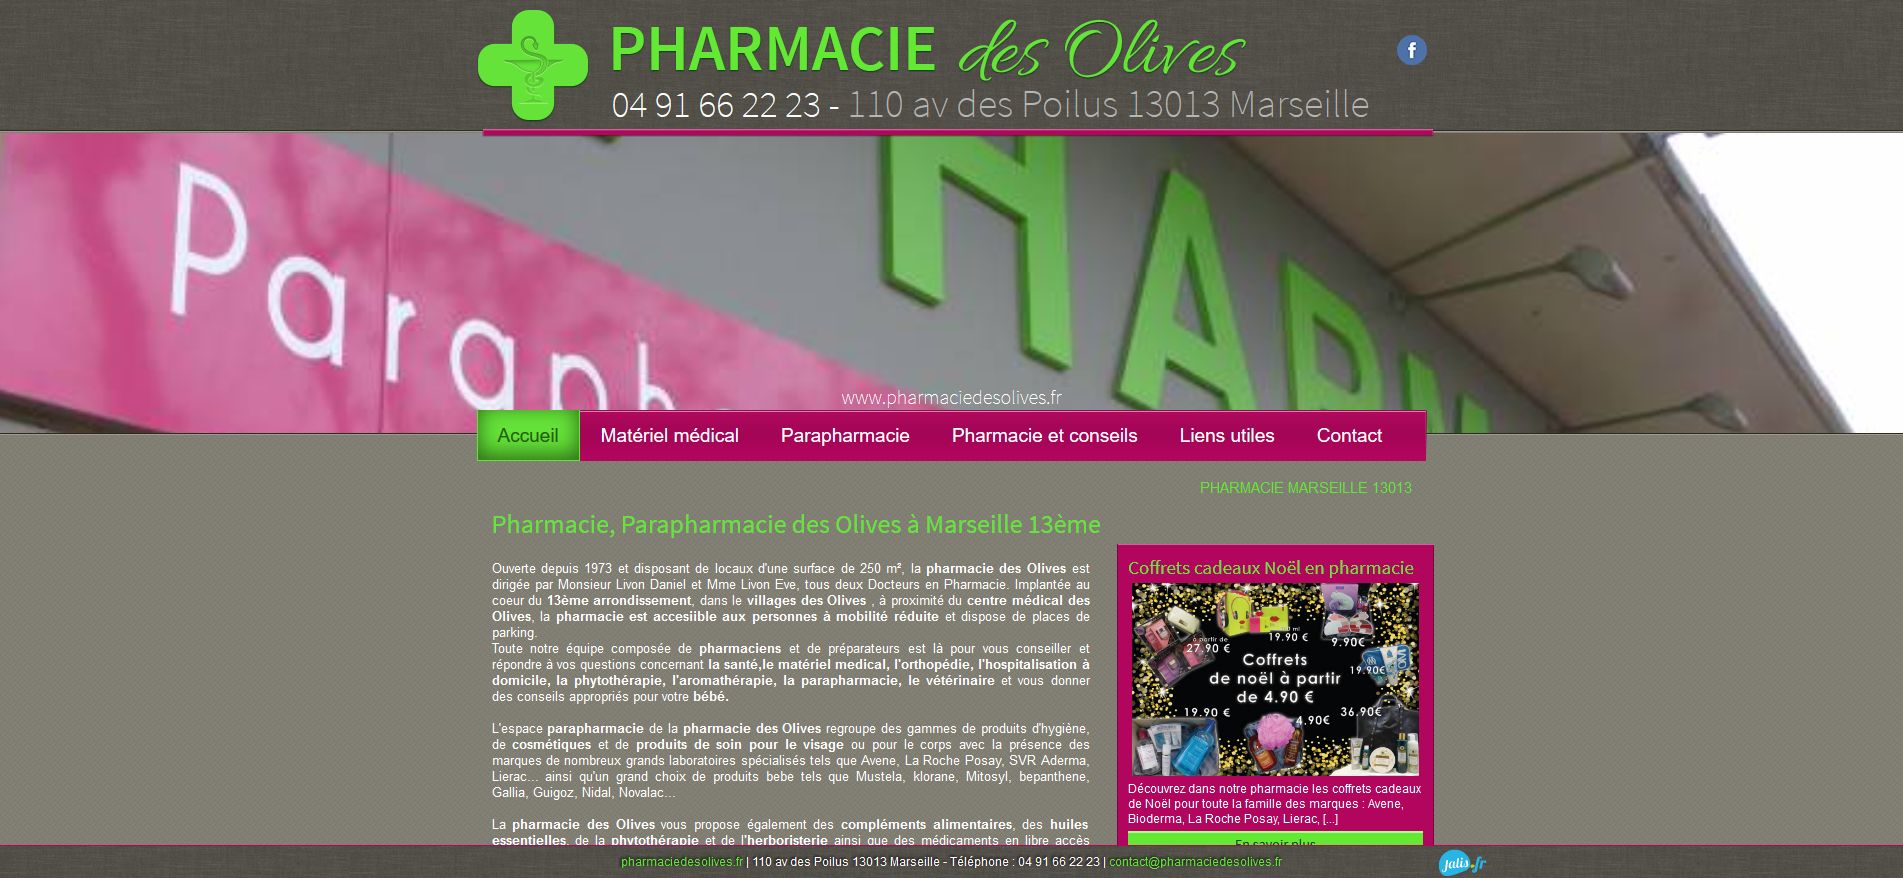 Pharmacie des Olives – Pharmacie et Parapharmacie à Marseille 13e